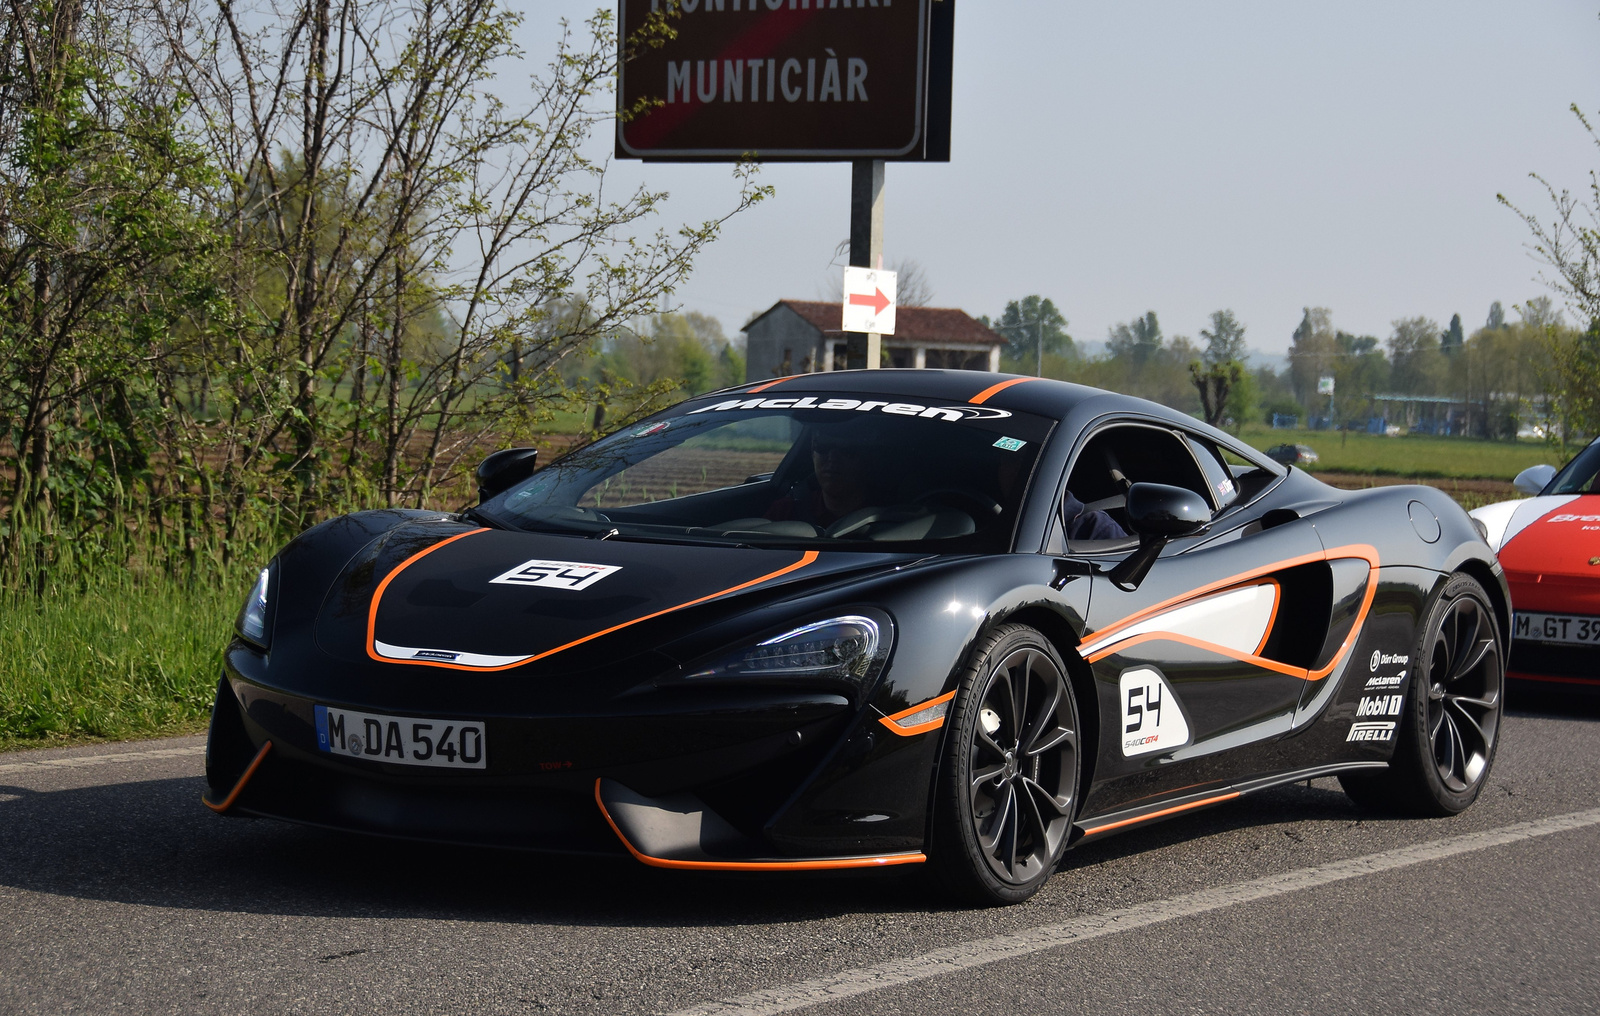 McLaren 540C